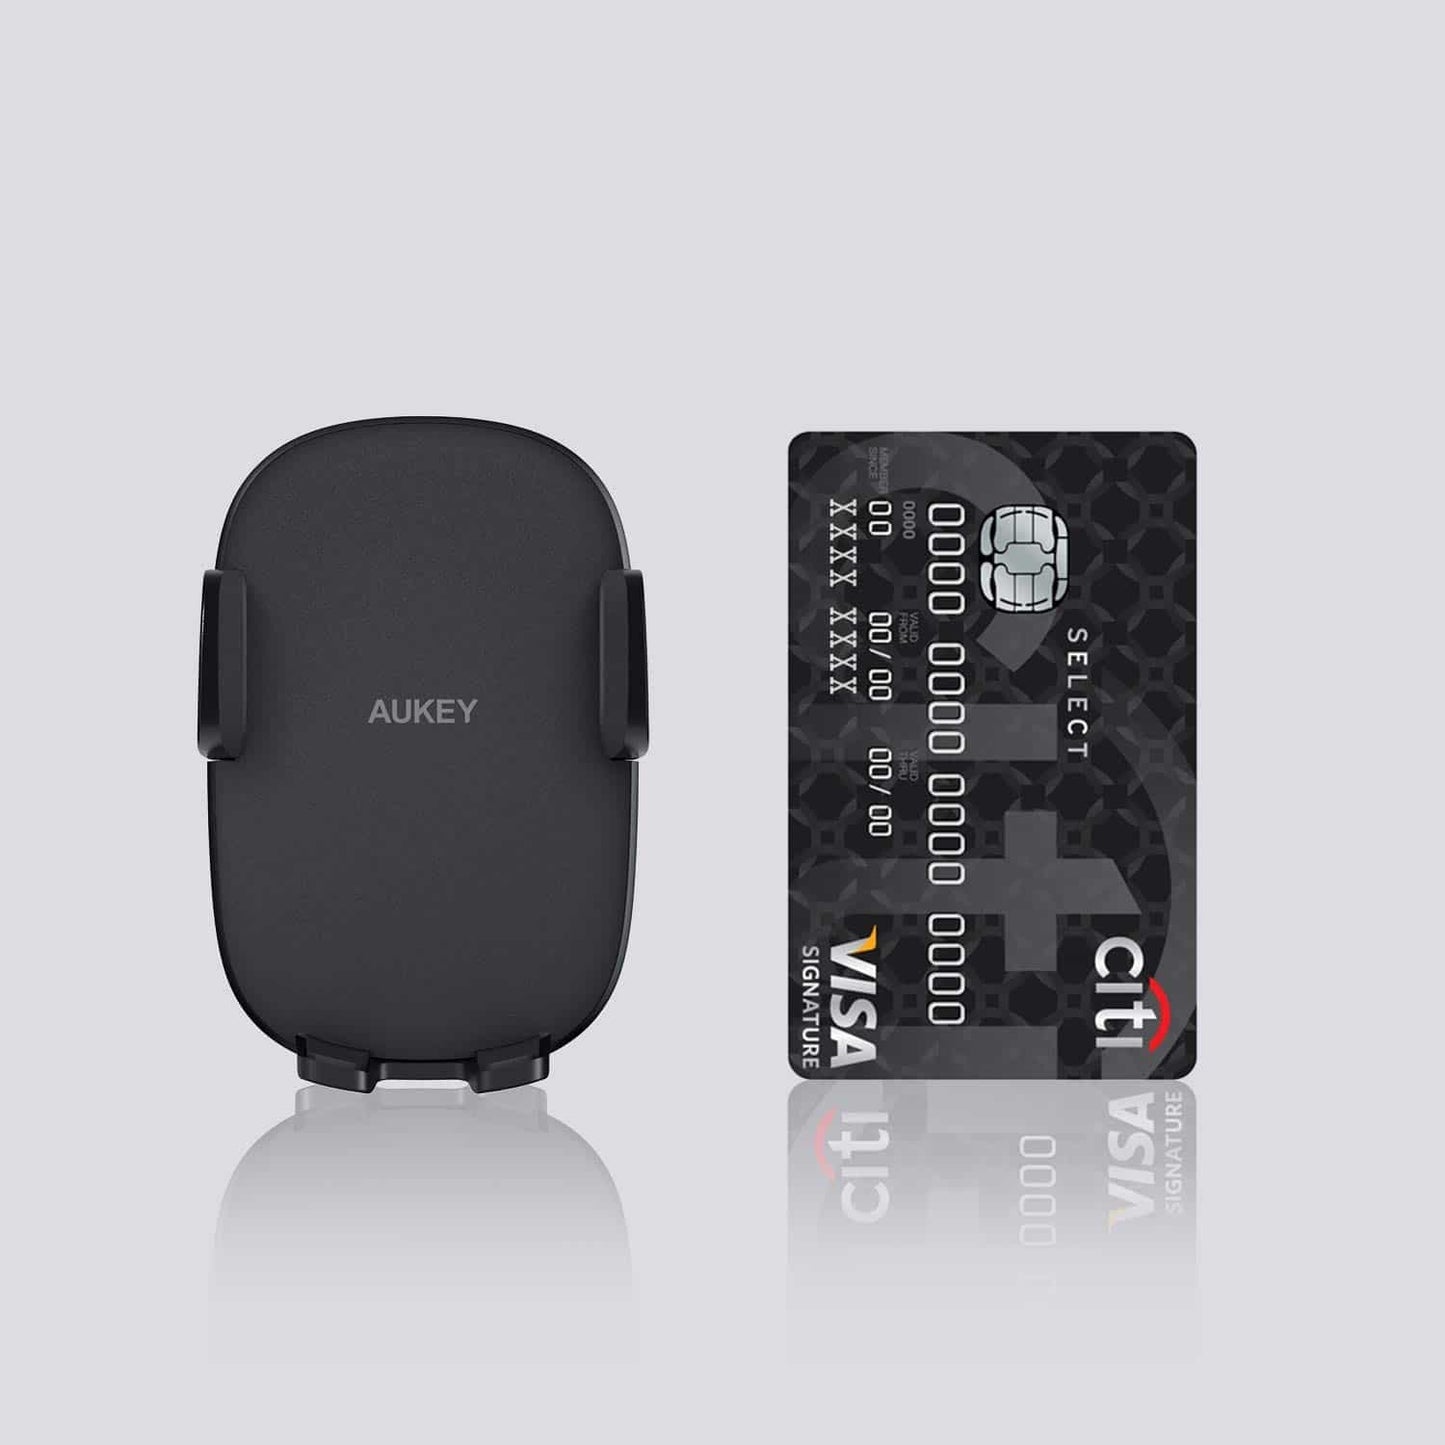 Aukey 360-Degree Flexible Phone Holder - Black